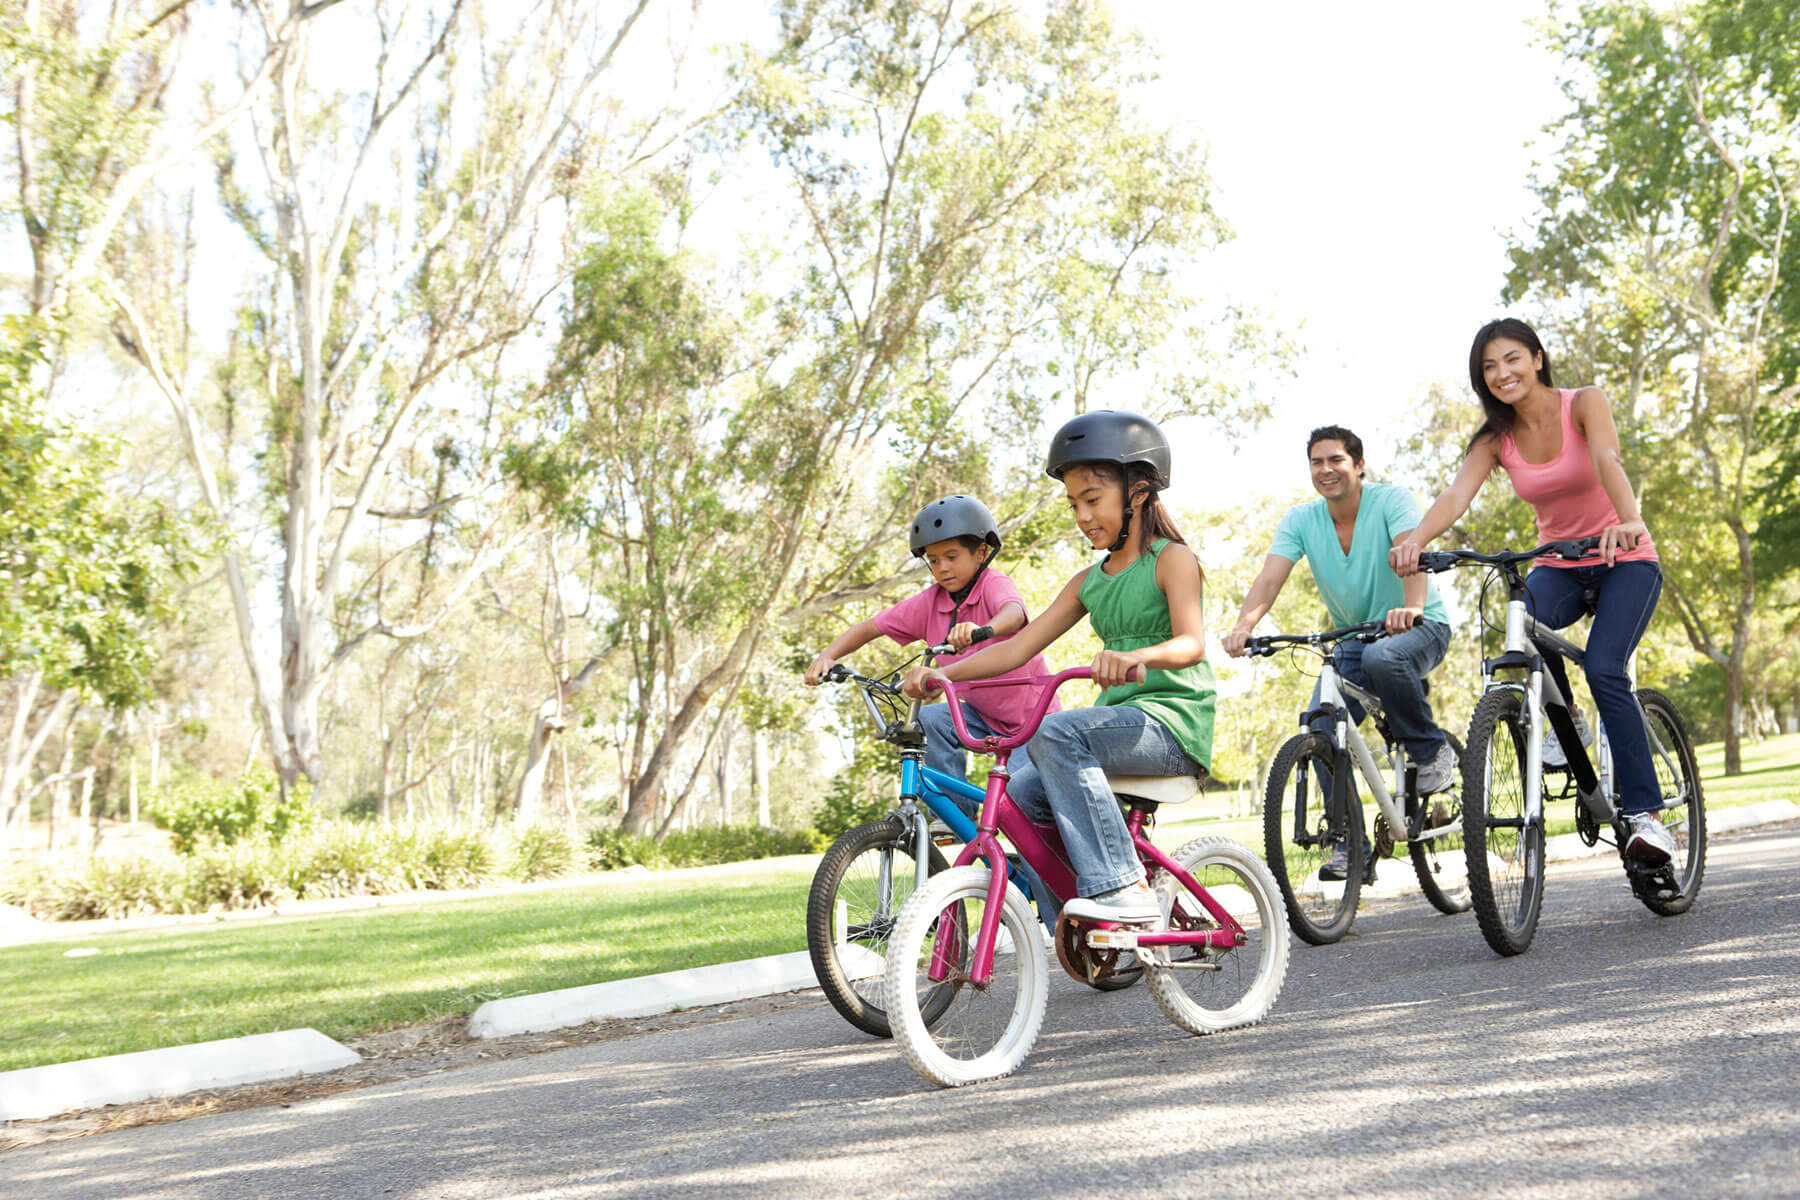 Family riding bikes on a road through a park